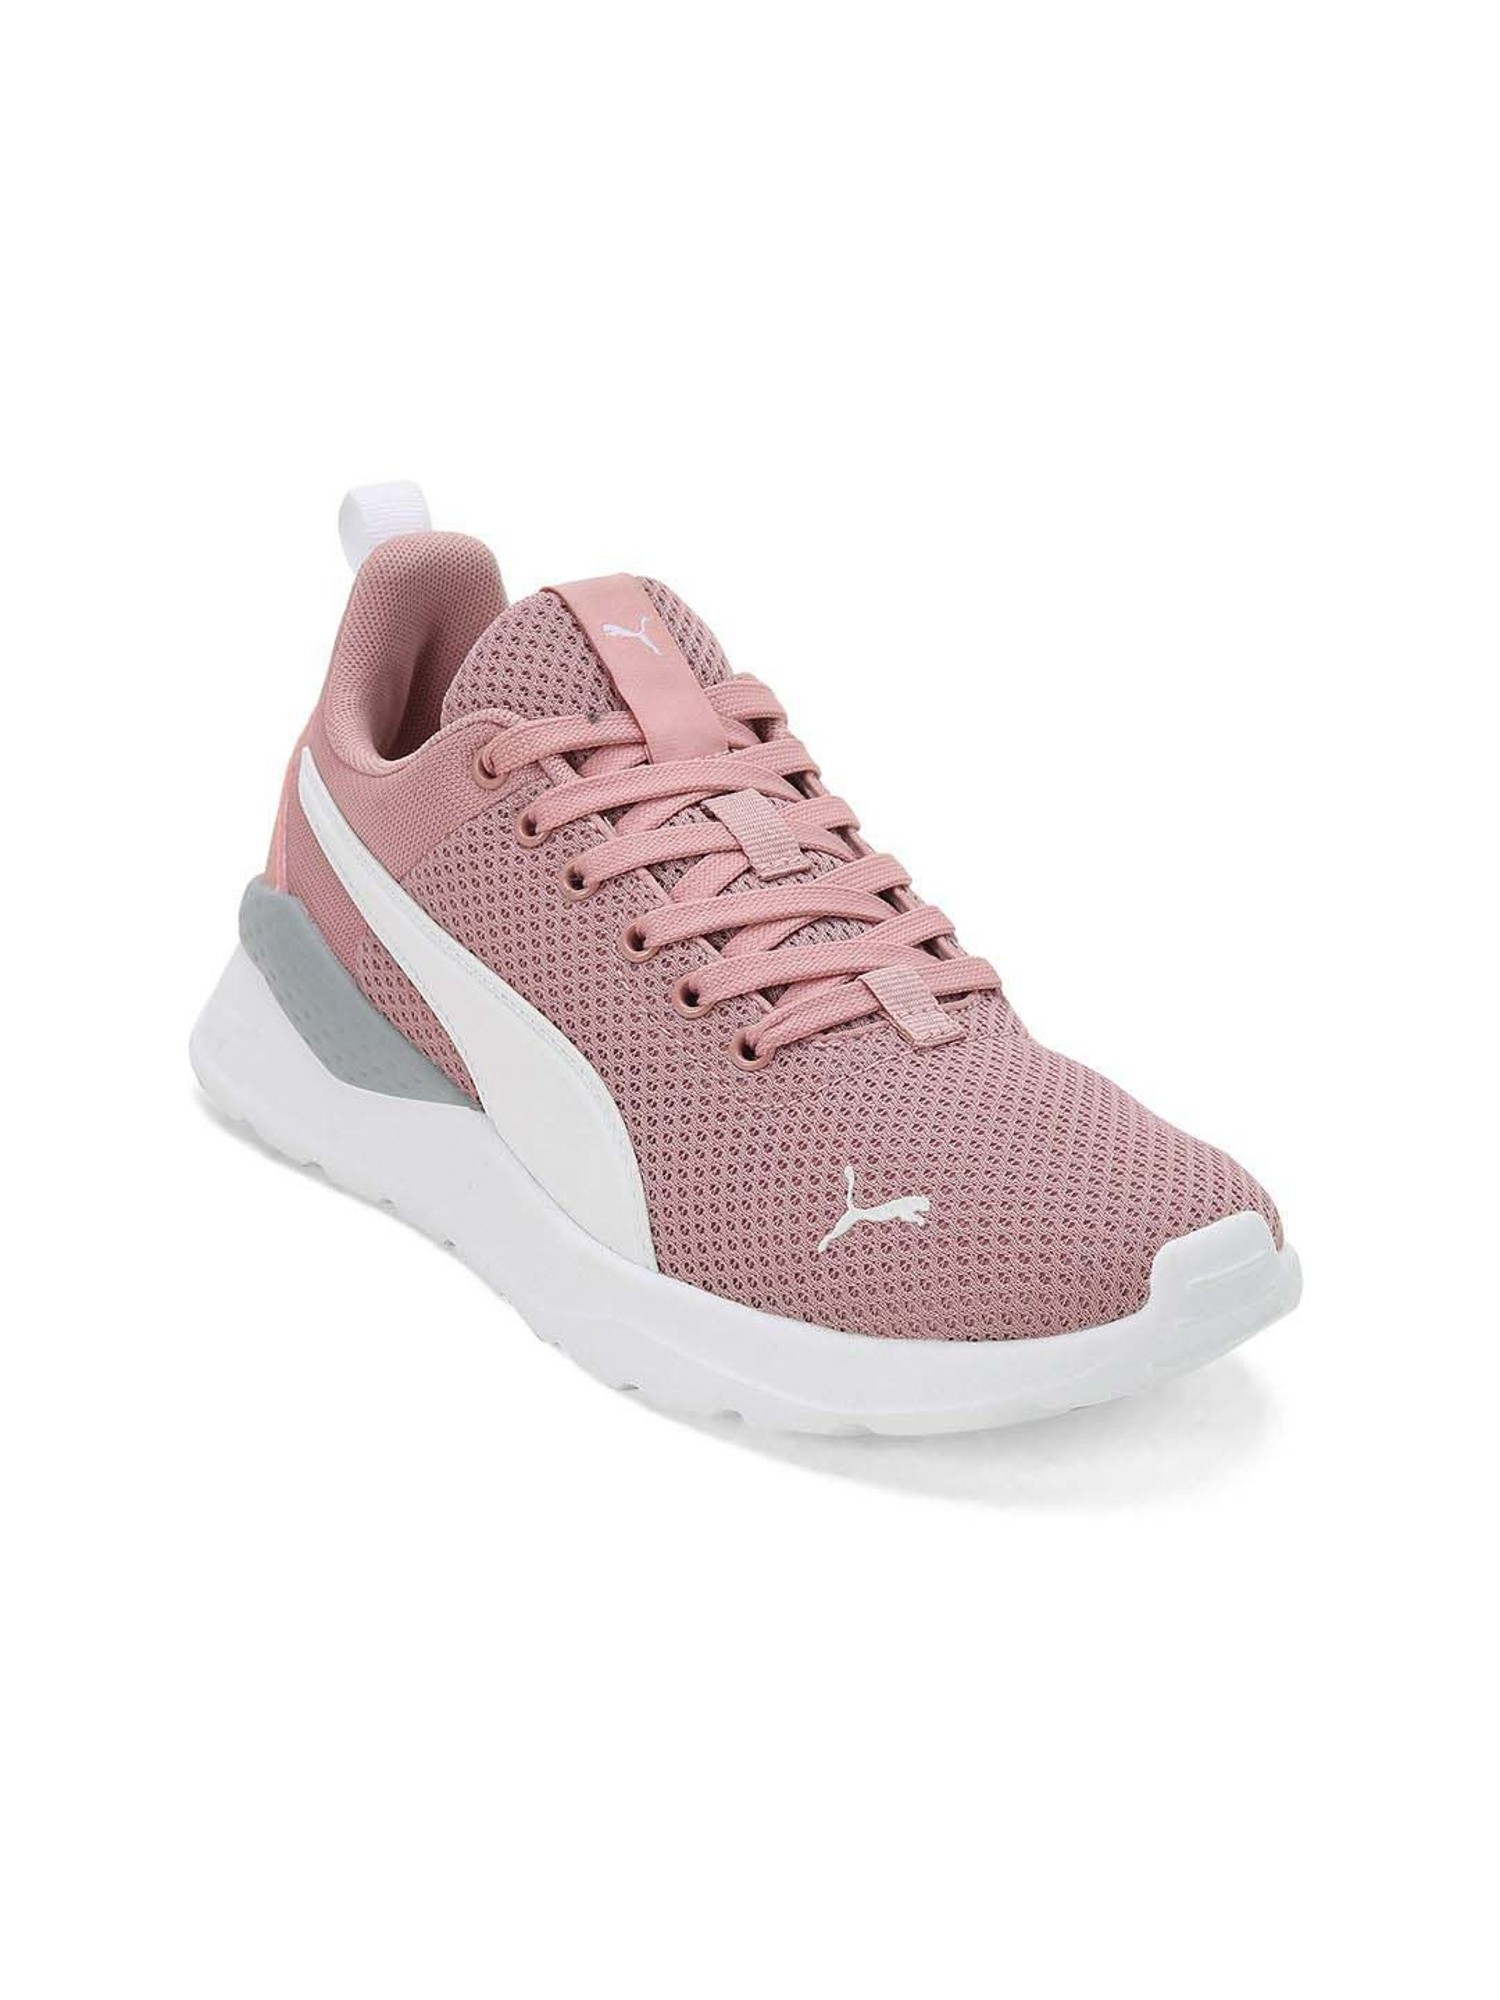 Puma Kids Anzarun Lite Pink Shoes White Training 